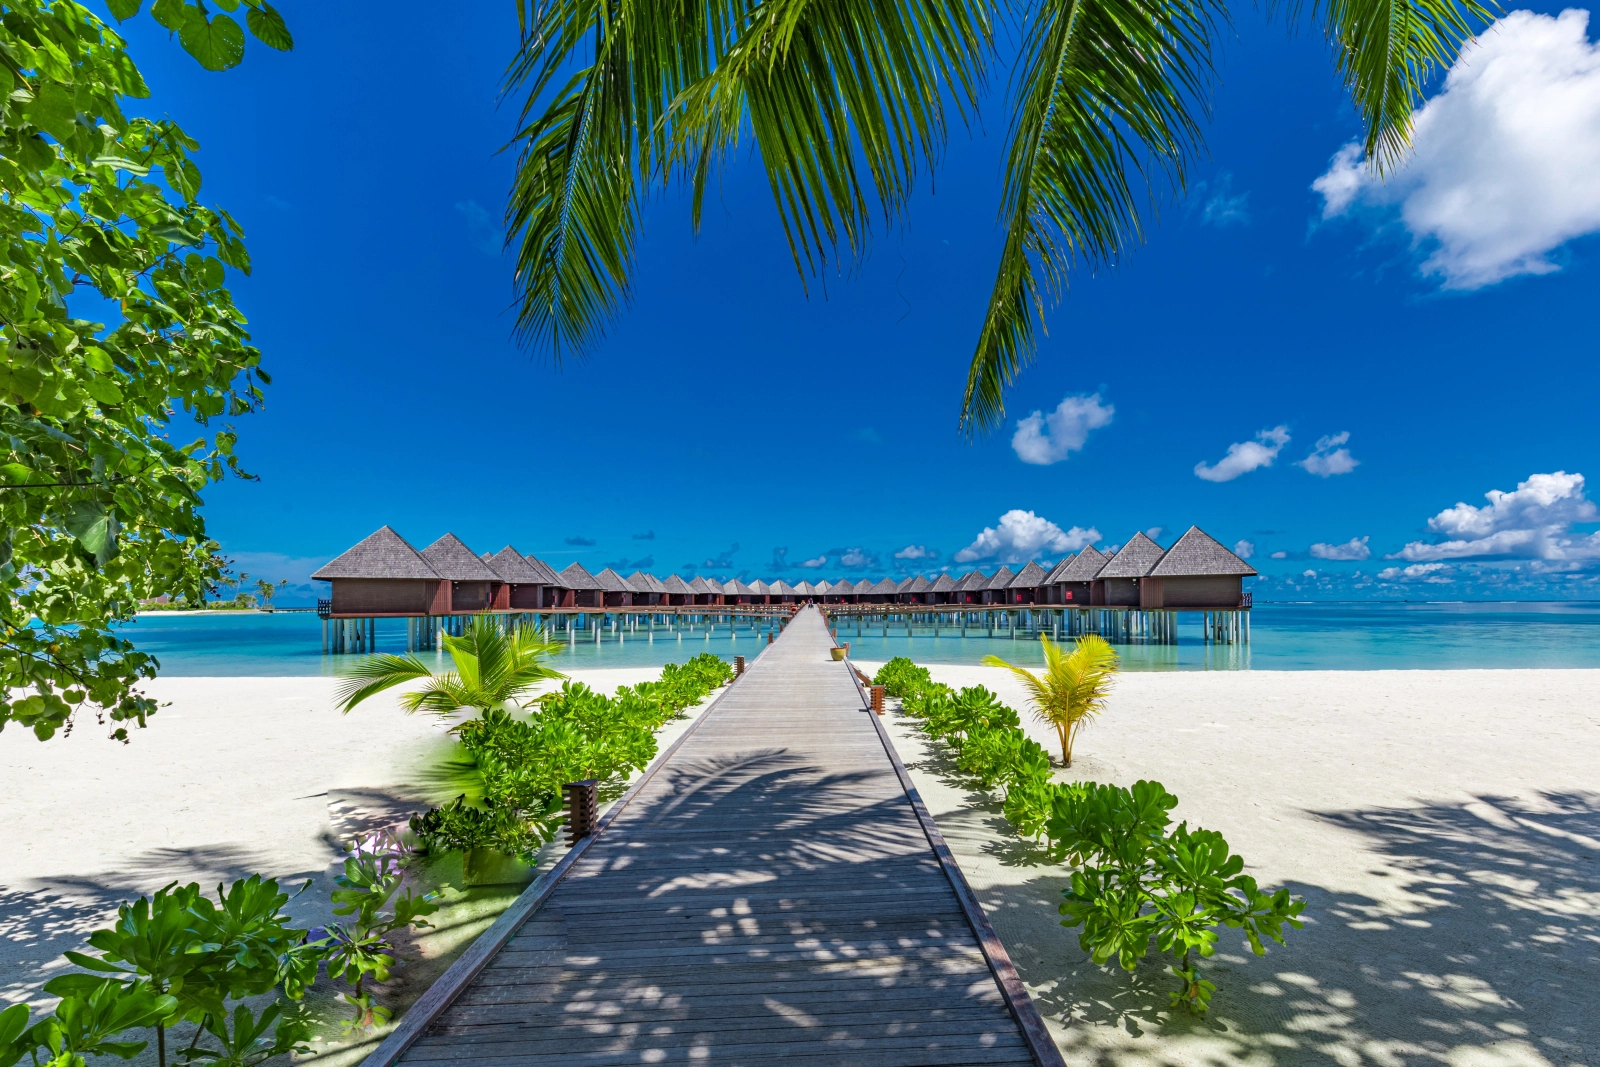  Olhuveli Island  strand - Maldives